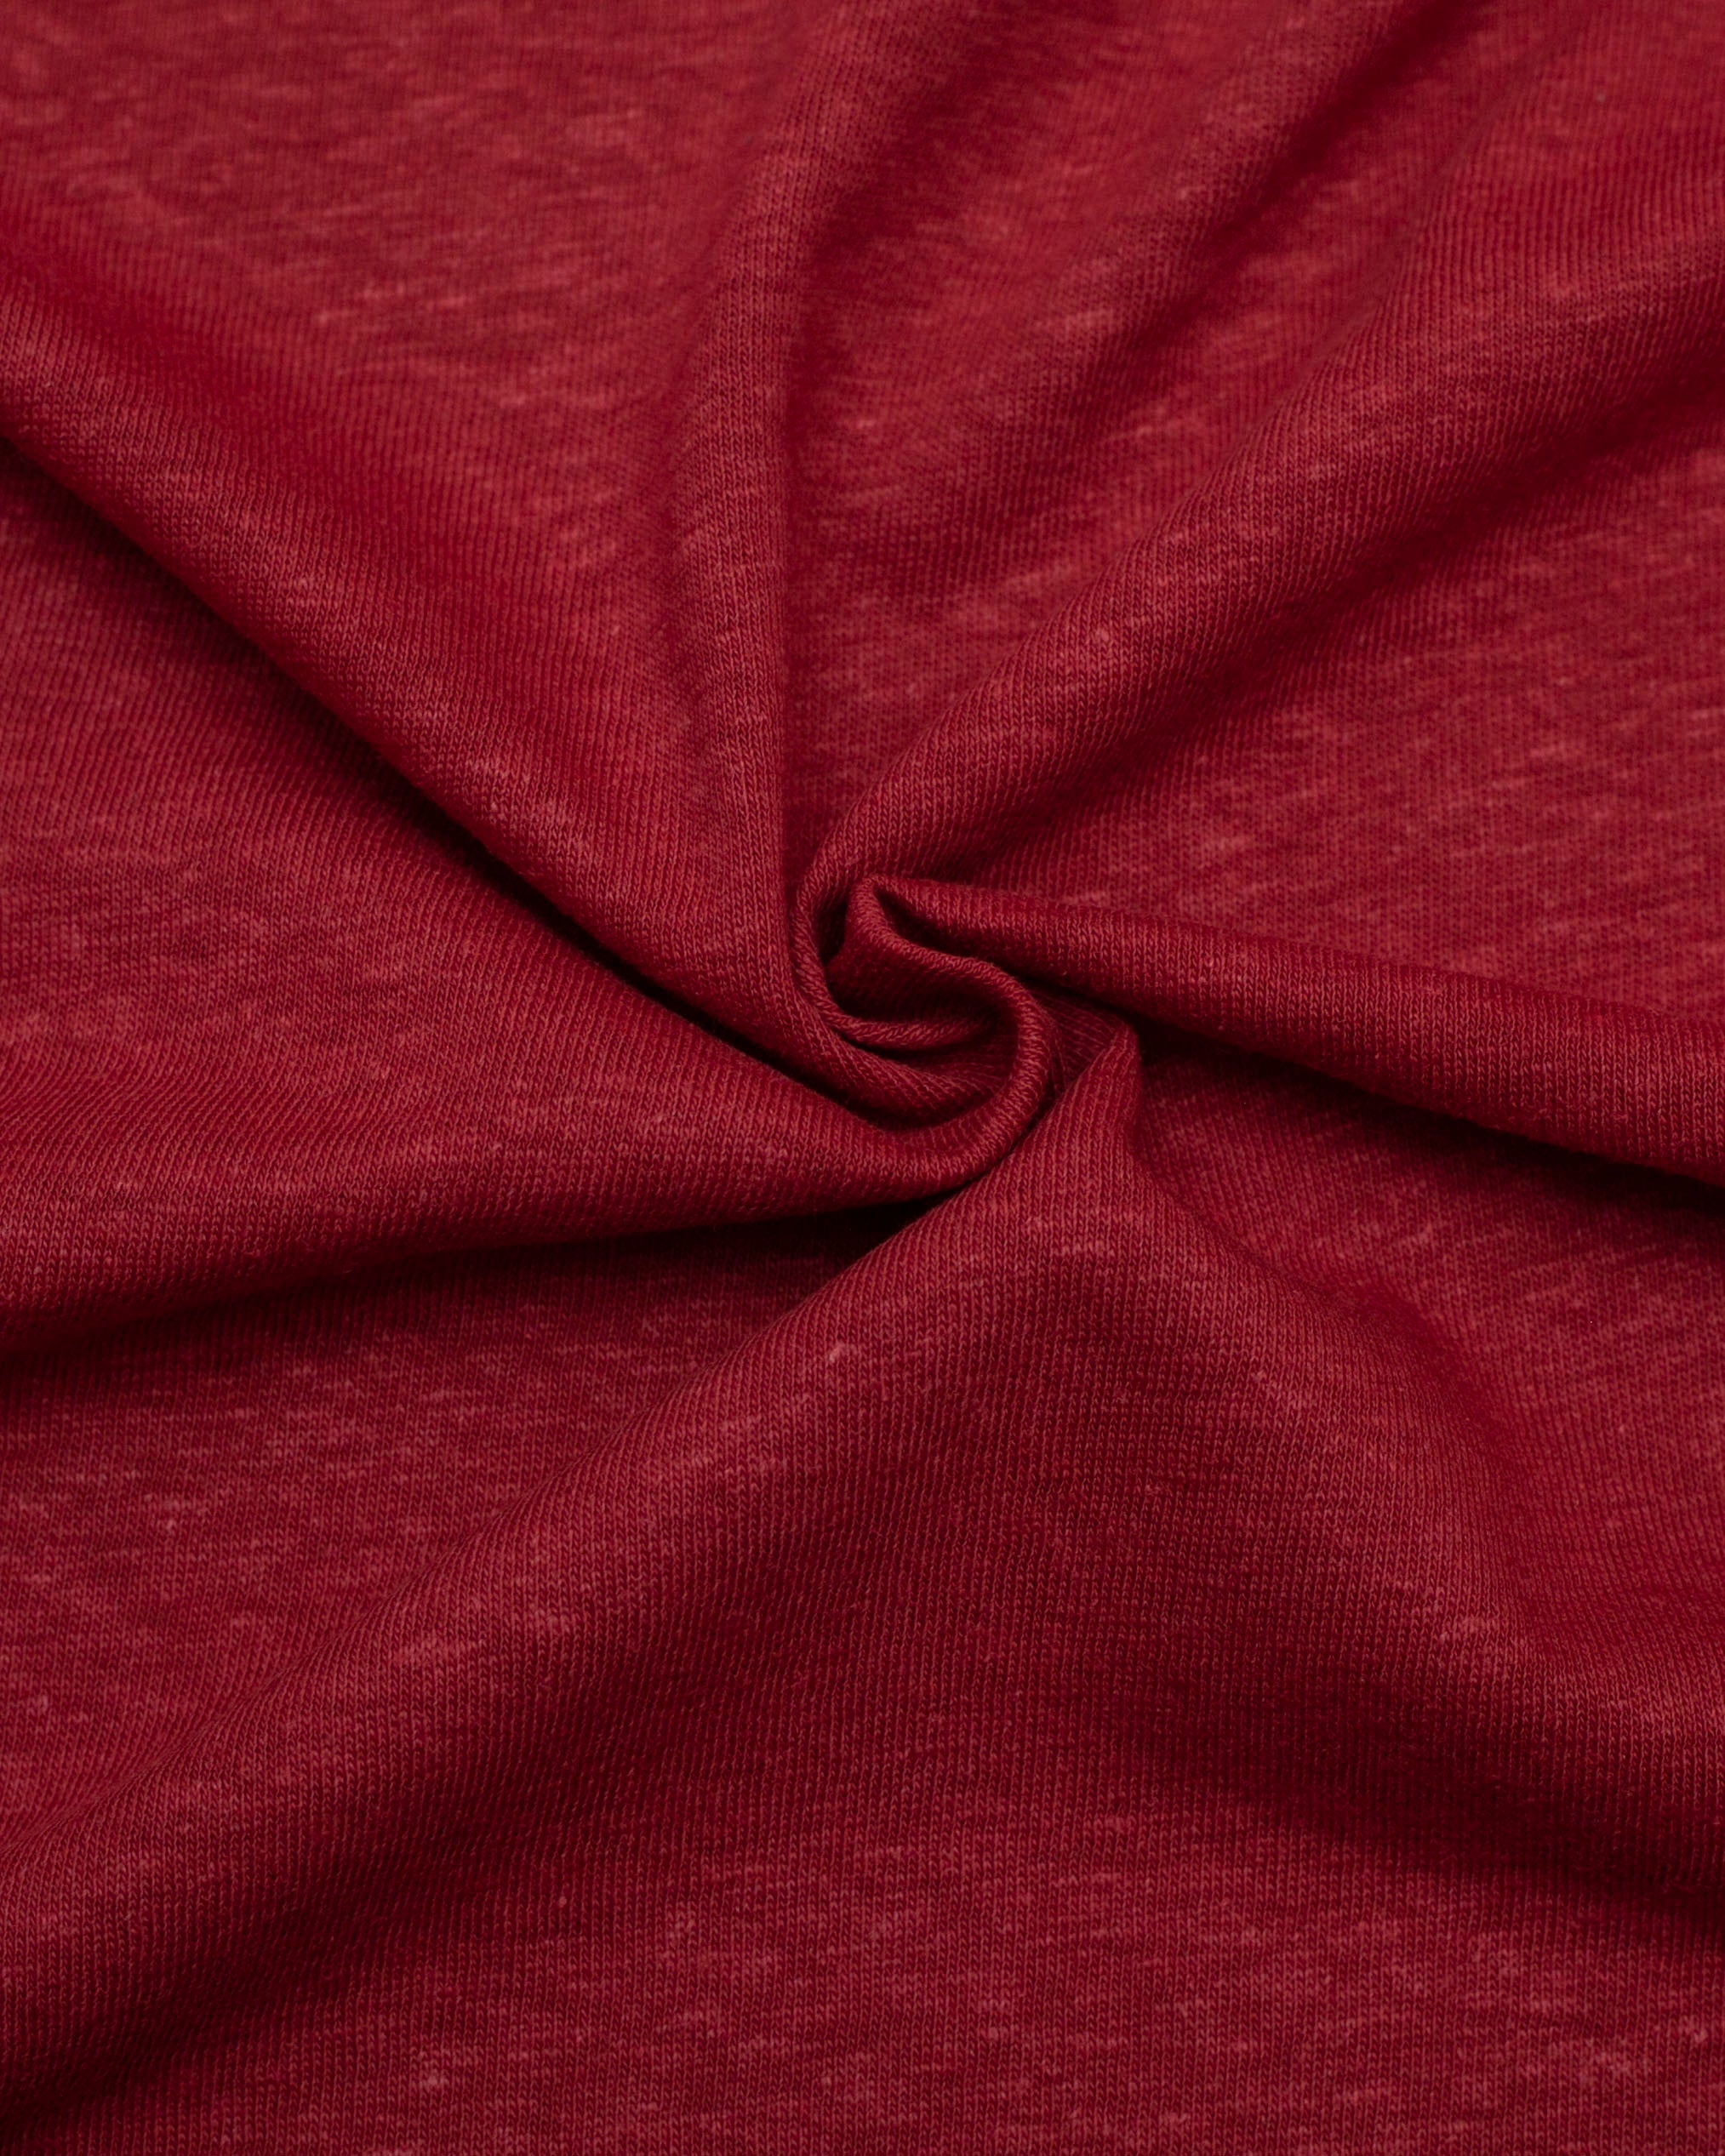 Fabric | Red Organic Cotton/Hemp Knit